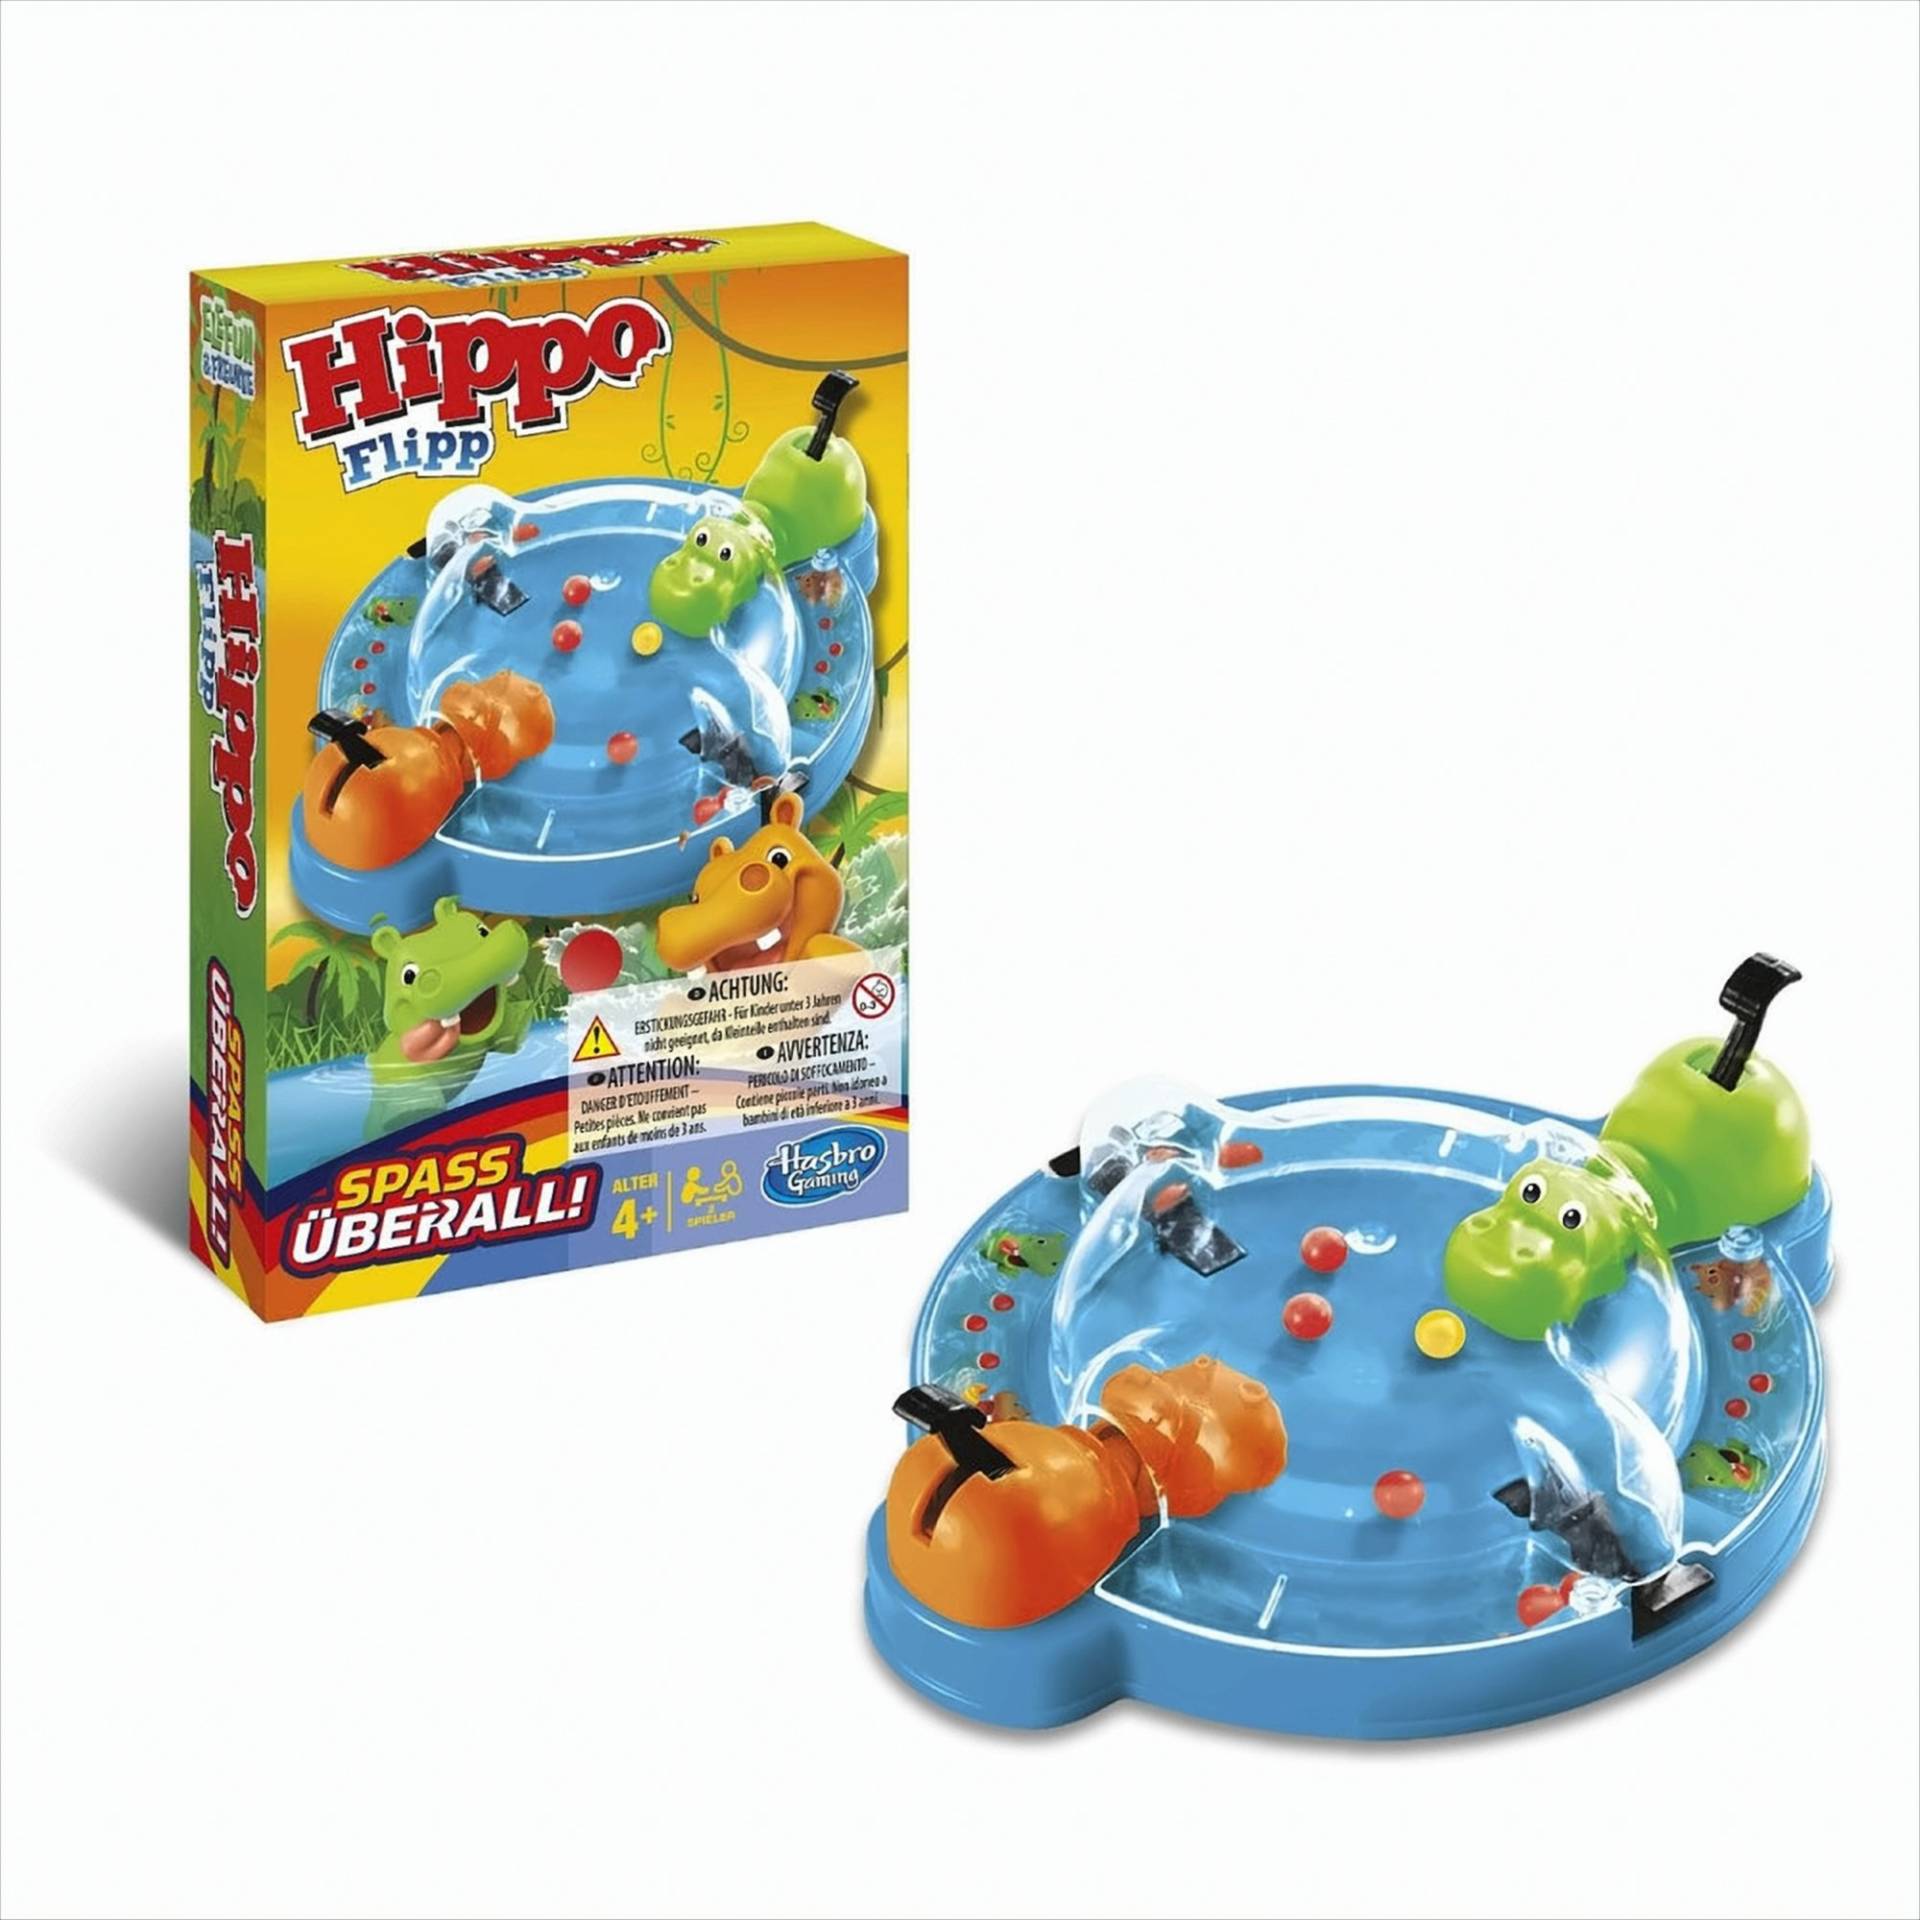 Hippo Flipp Kompakt - Edition 2015 von Hasbro Deutschland GmbH